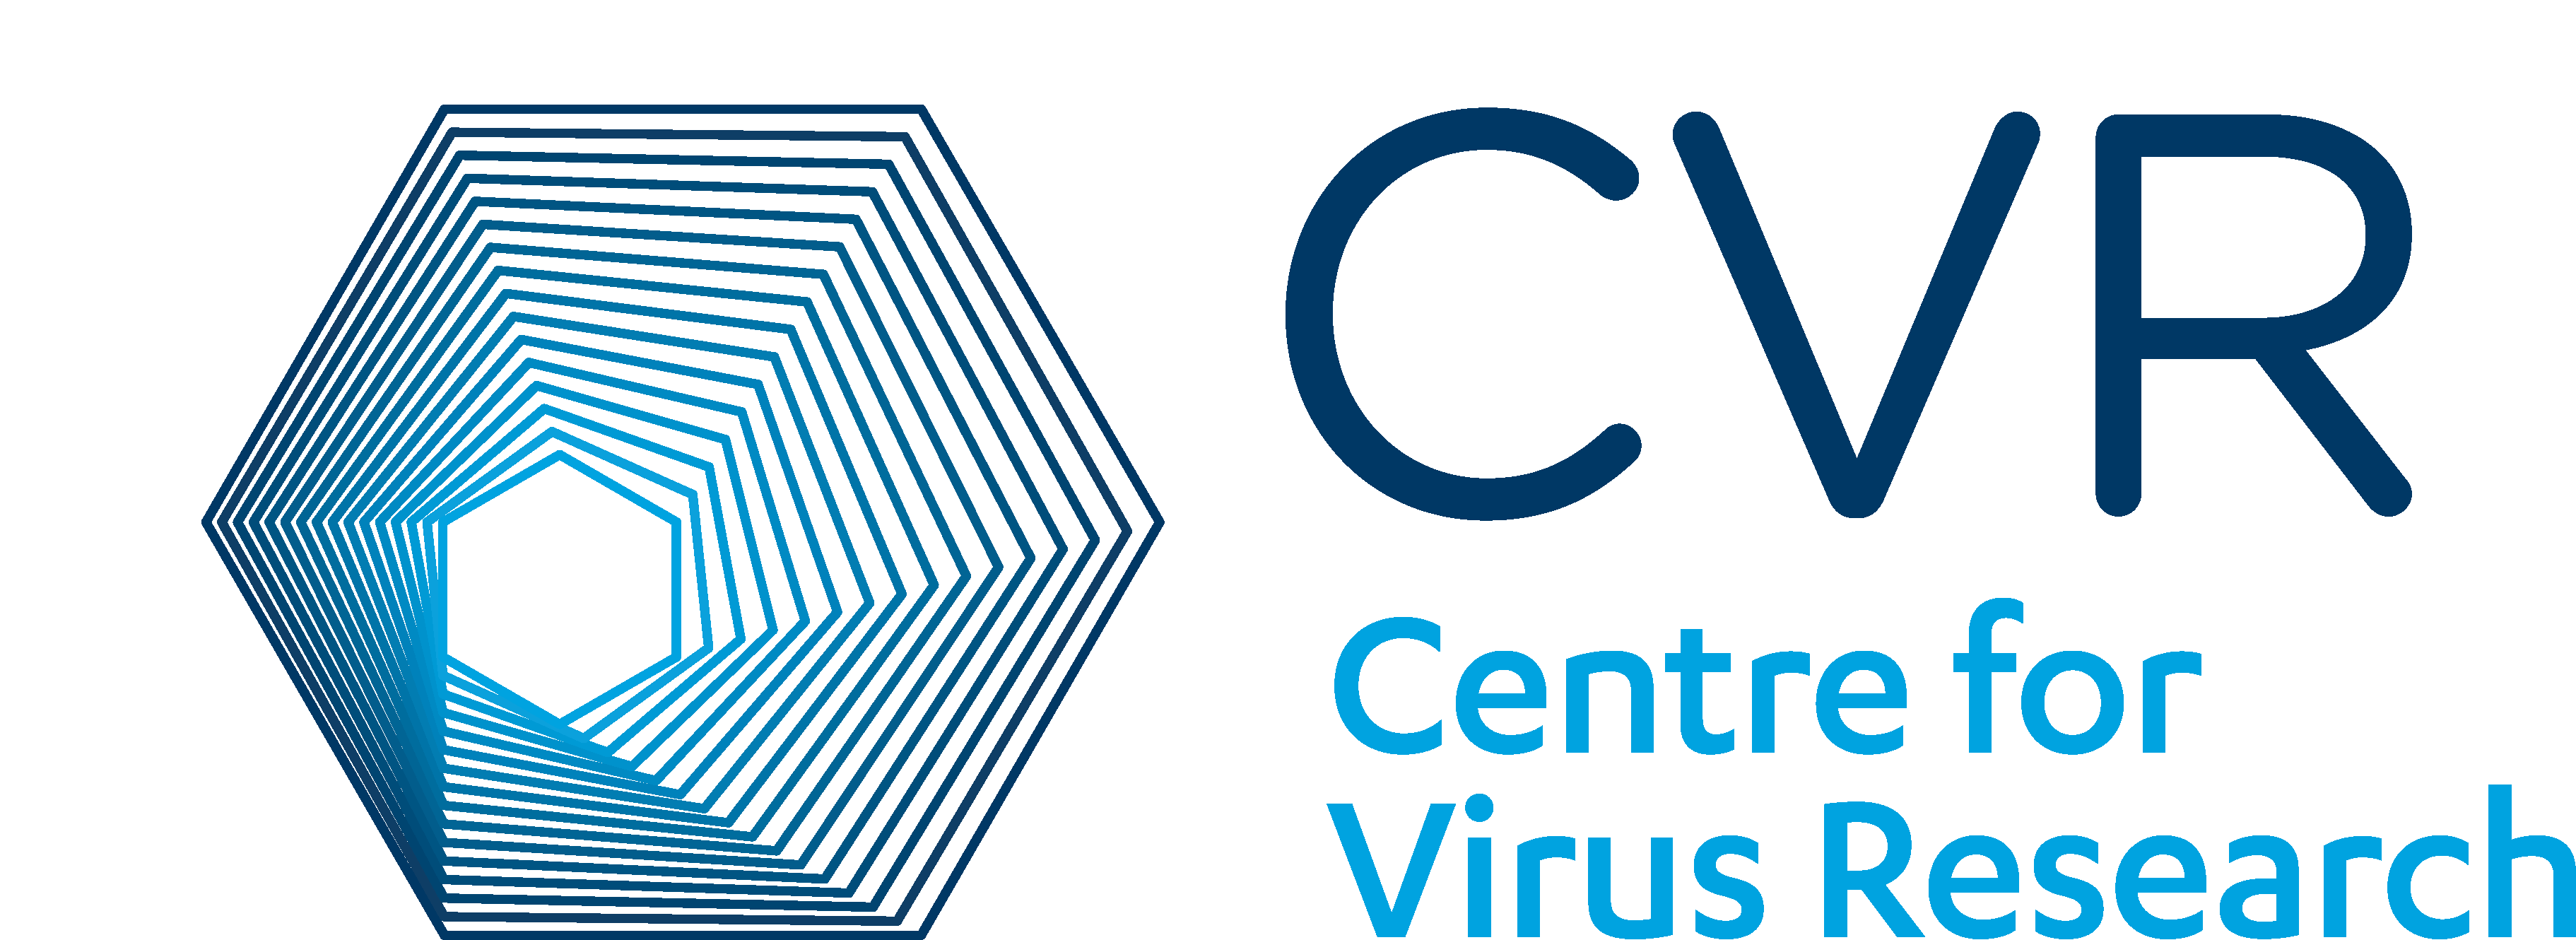 Centre for Virus Research logo